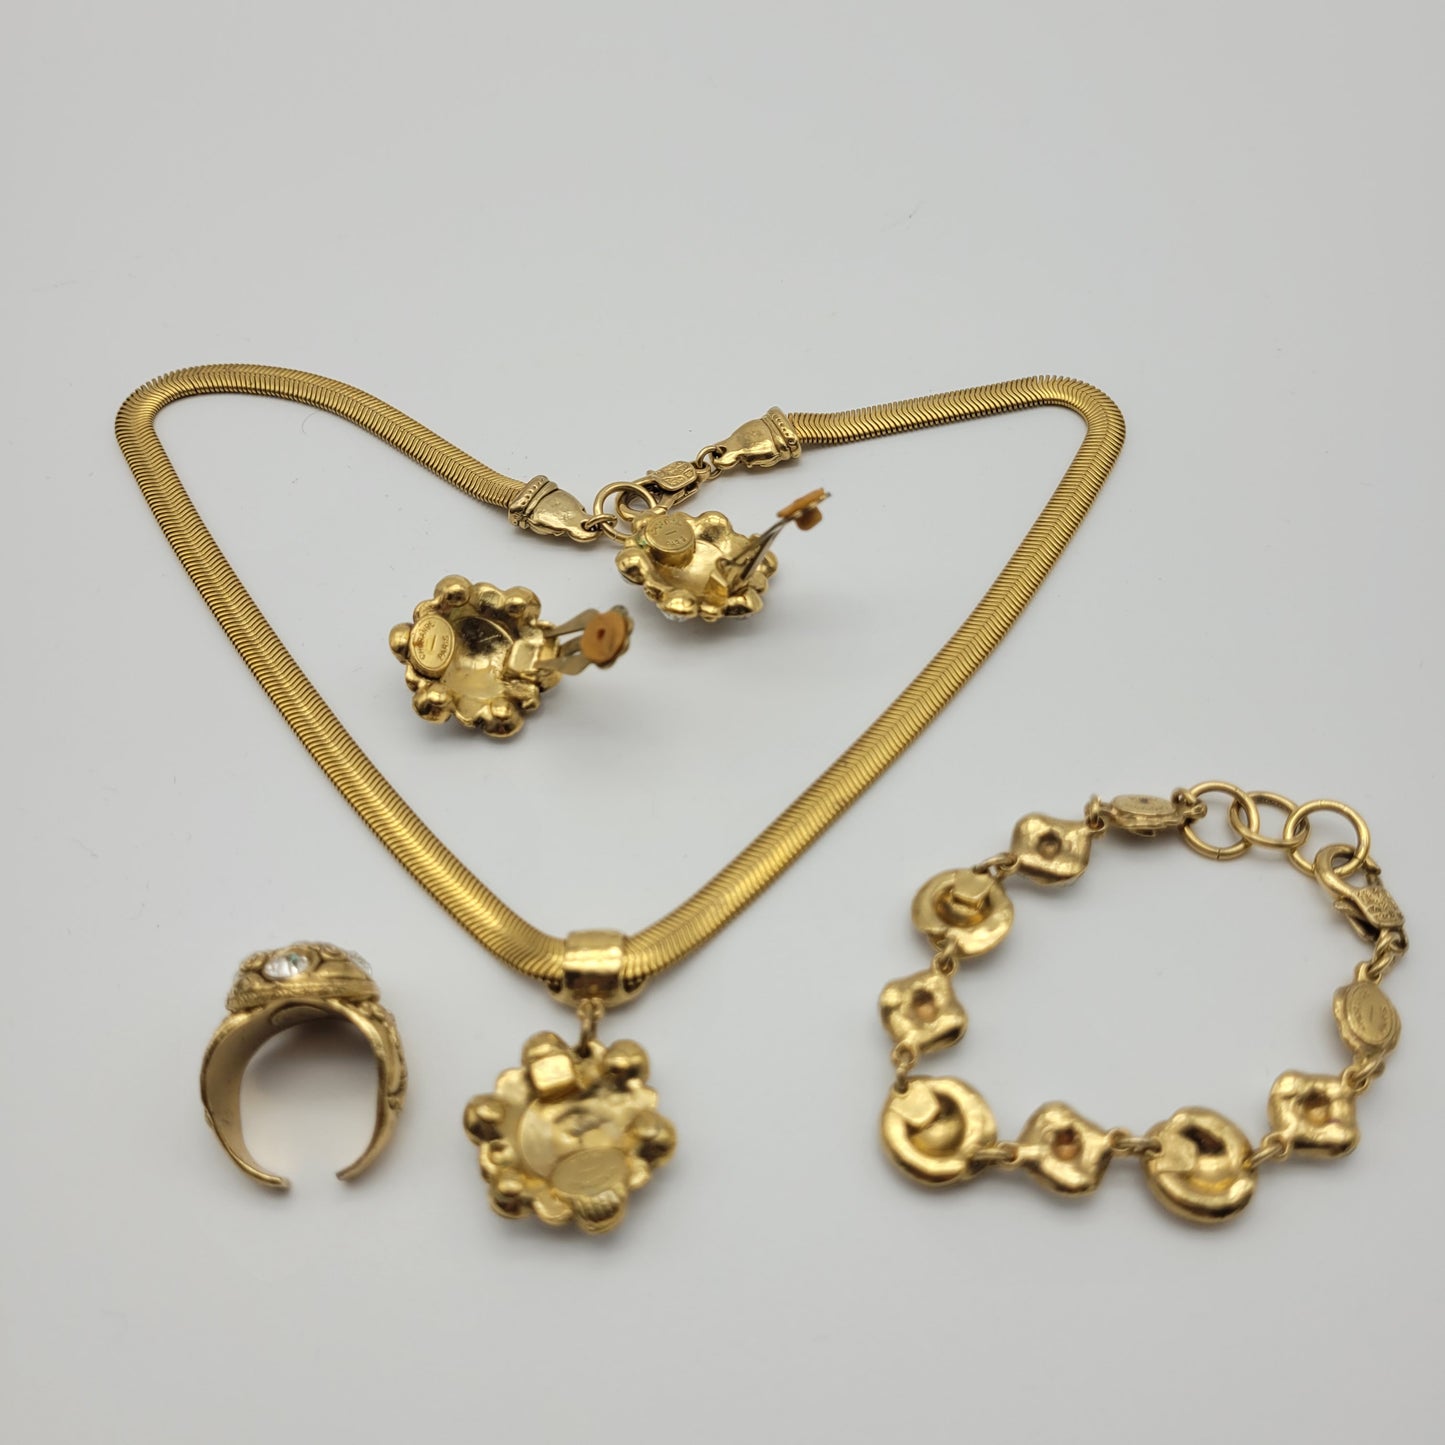 Vintage flower jewelry set Chorange